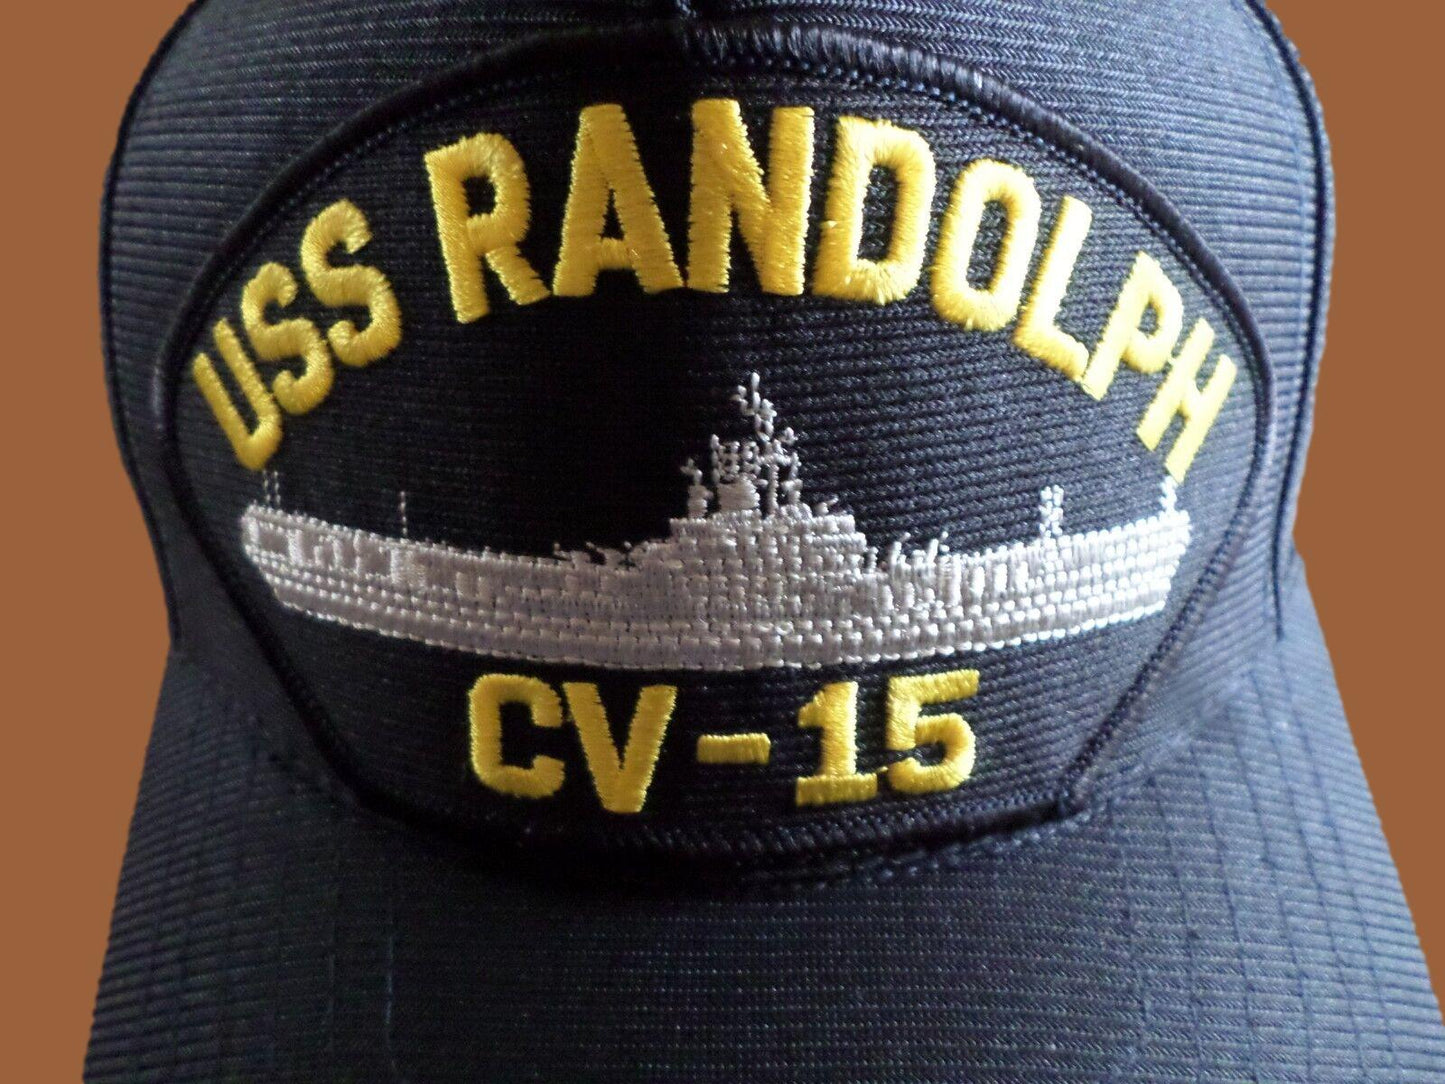 USS RANDOLPH CV-15 U.S NAVY SHIP HAT U.S MILITARY OFFICIAL BALL CAP U.S.A MADE